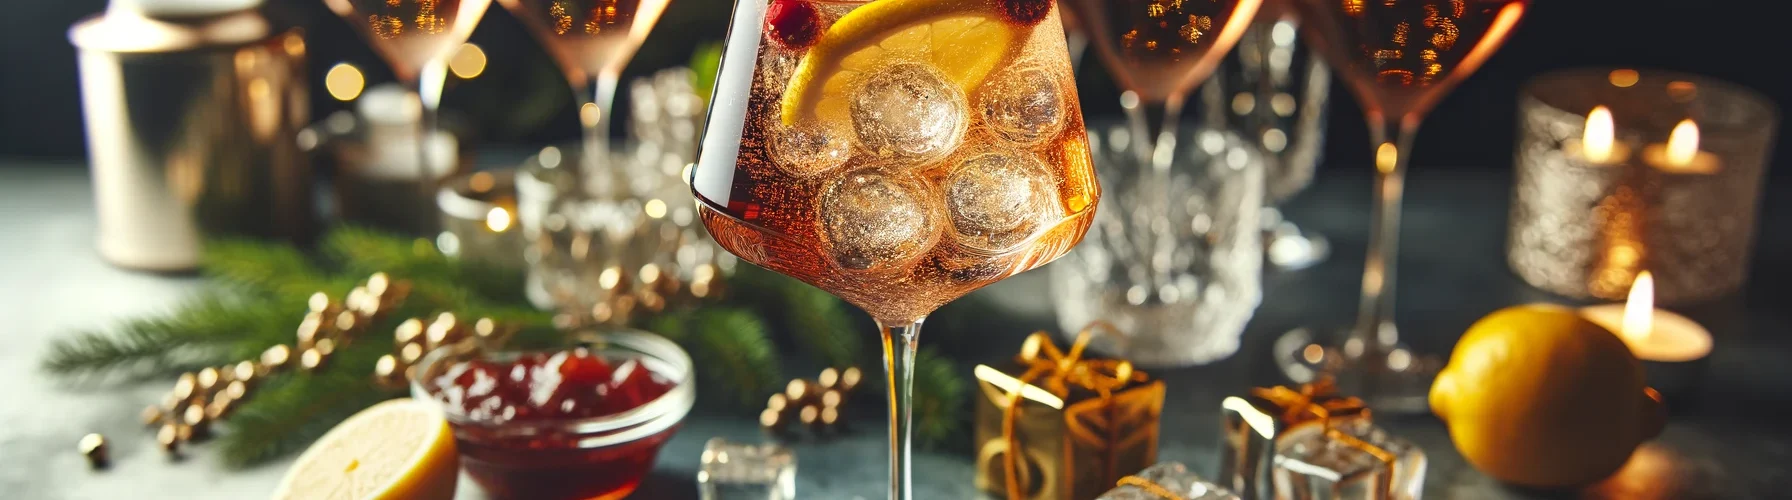 коктейль с шампанским и вермутом на праздничном столе